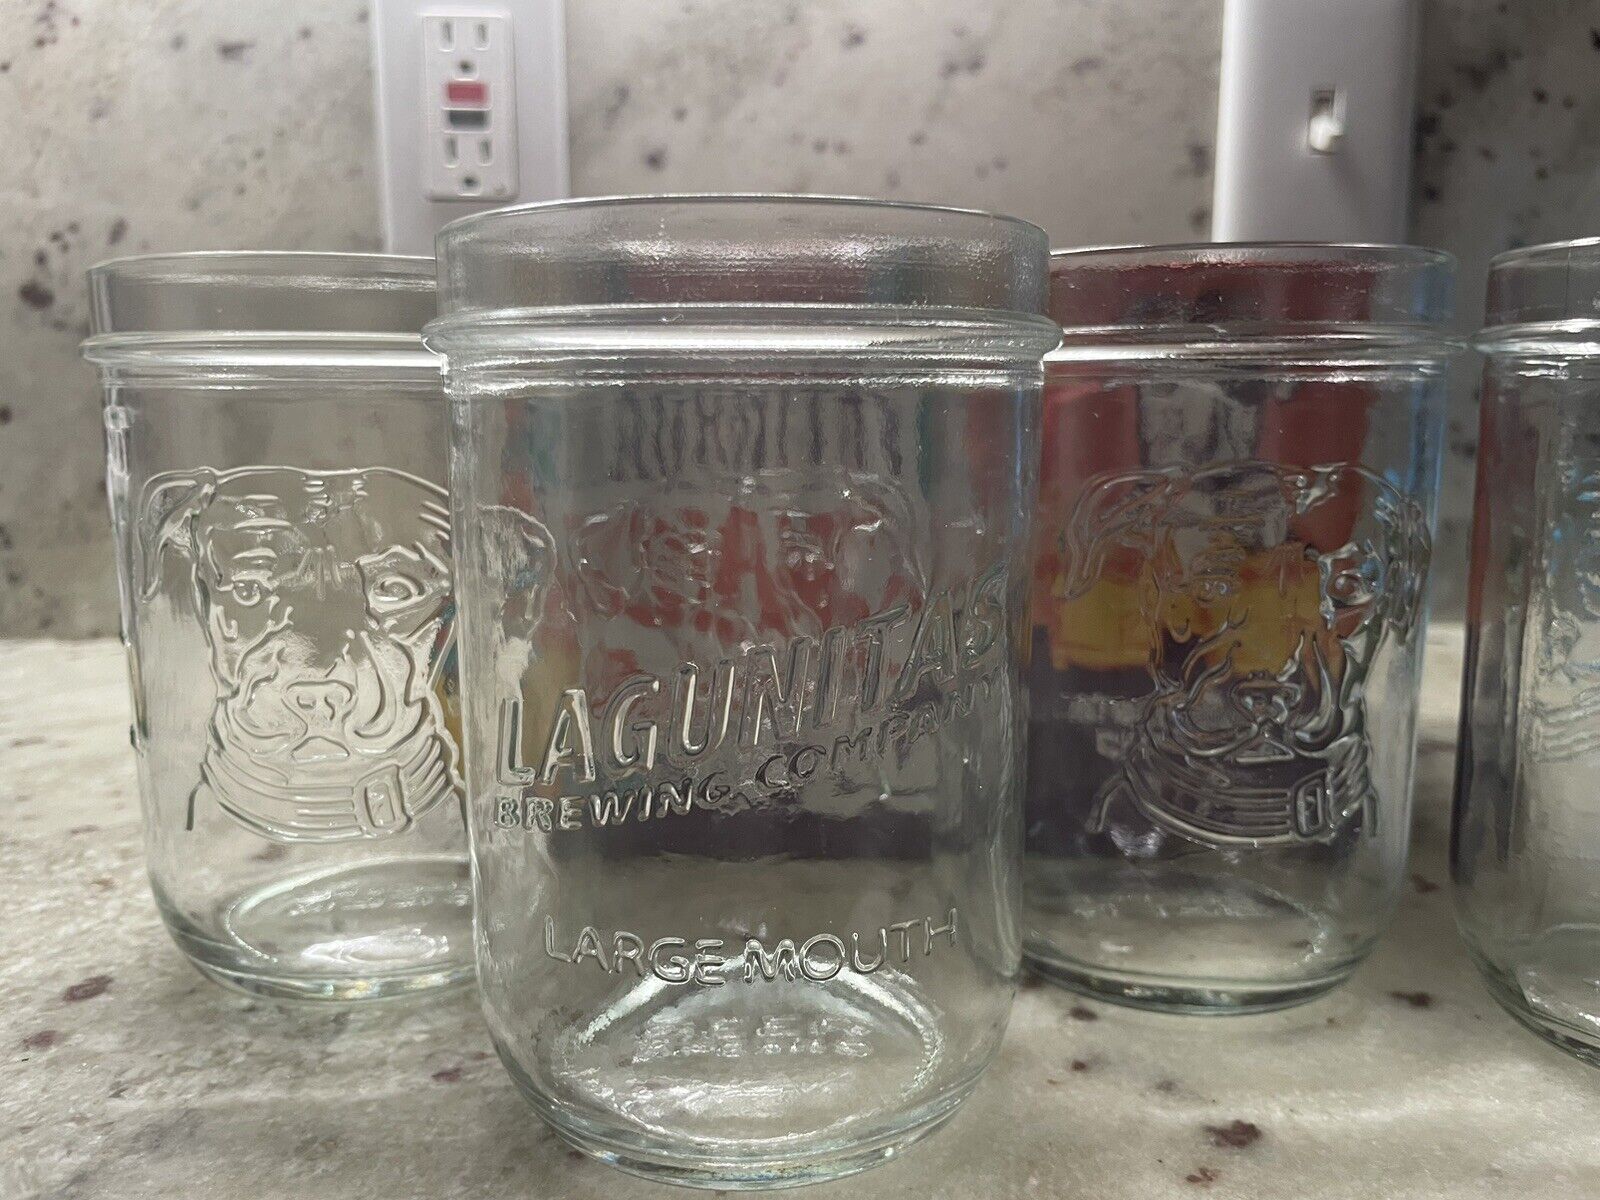 4 Lagunitas Brewing 16 Oz Large Mouth Mason Jar Beer Embossed Glasses IPA New BX